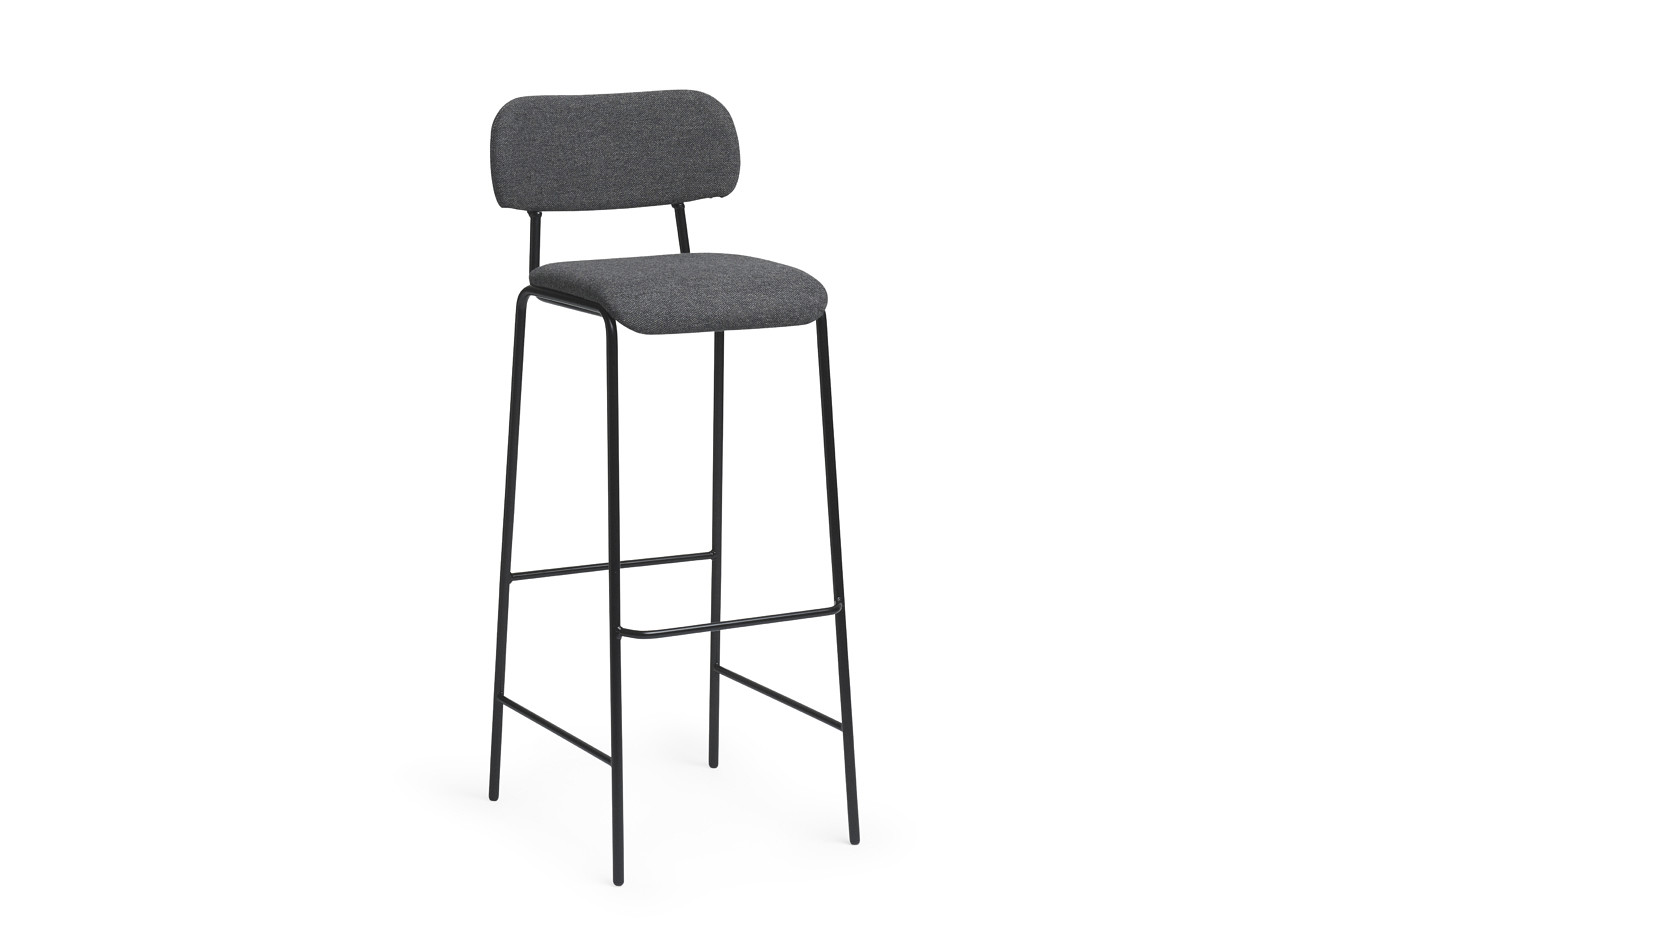 Lean bar stool